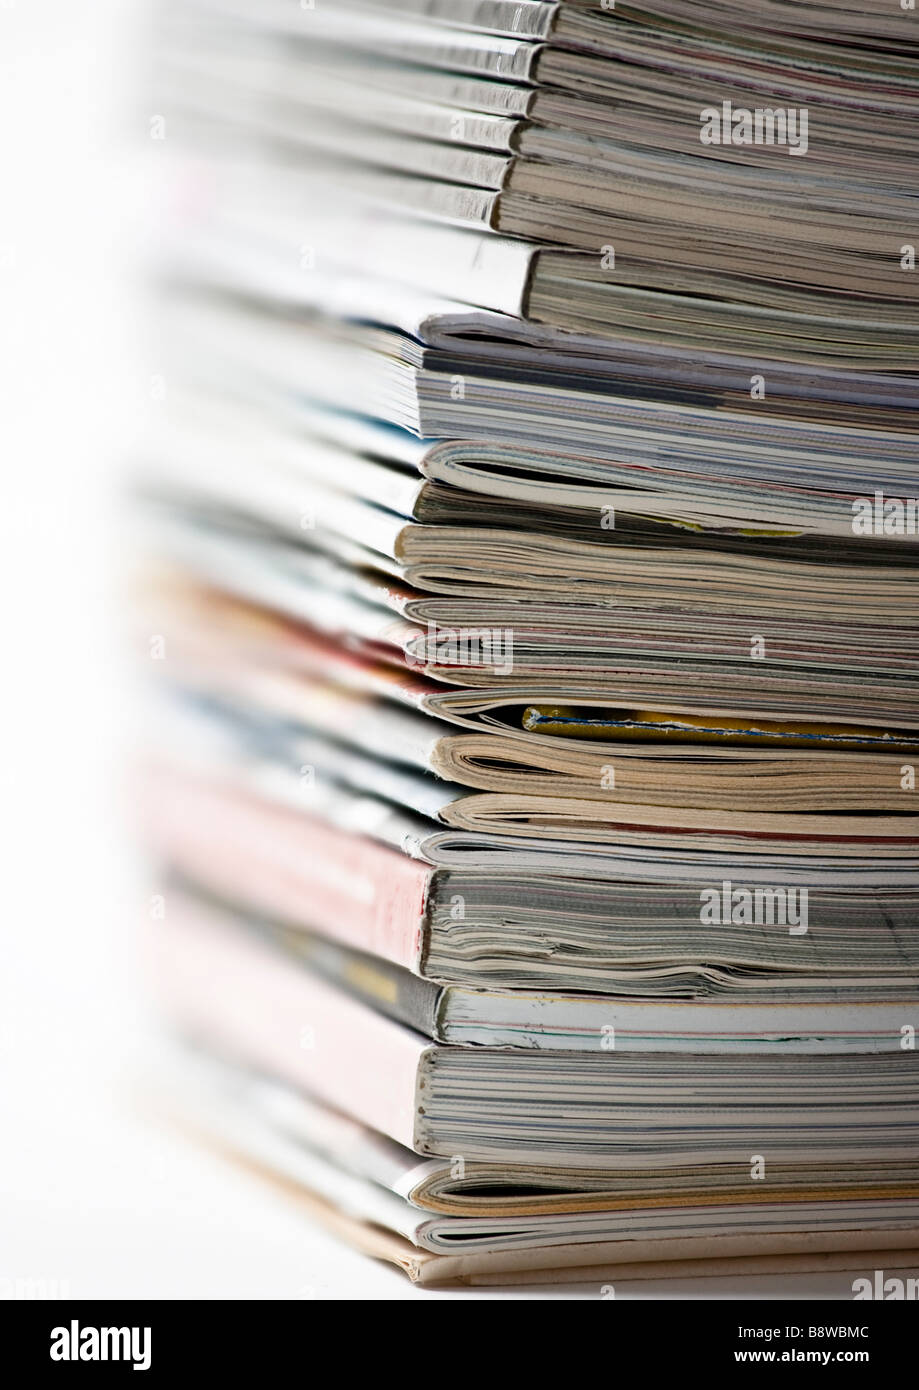 Studio shot of a pile of magazines Stock Photo